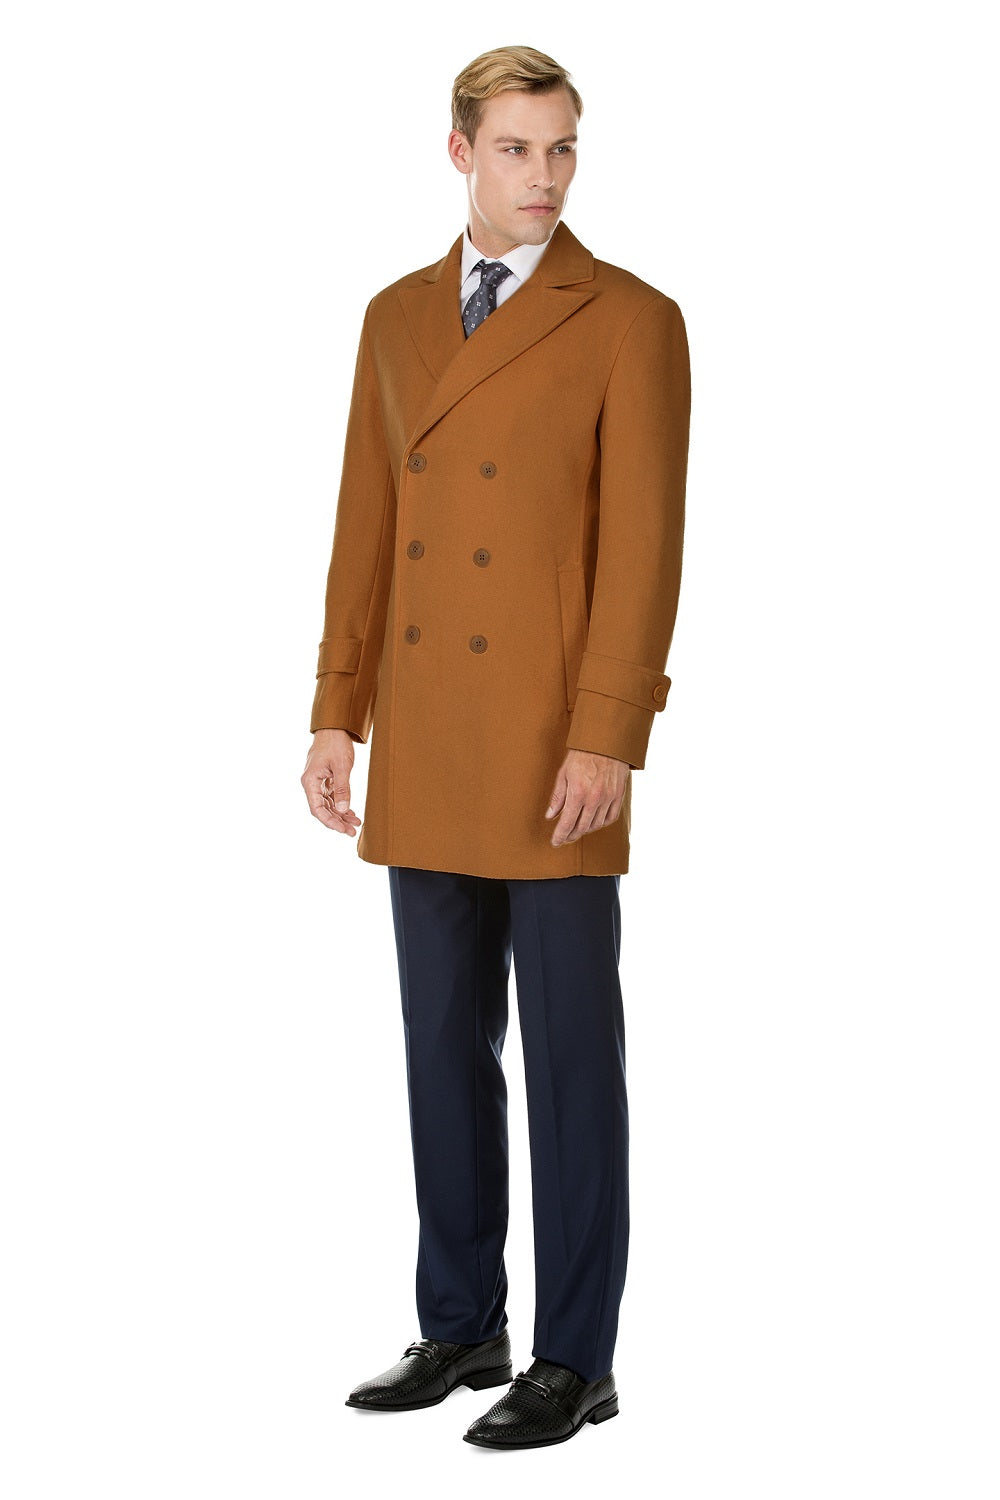 Men's Pea Coat Winter Warm Lapel Double-Breasteed Overcoat Long Jacket  Fashion